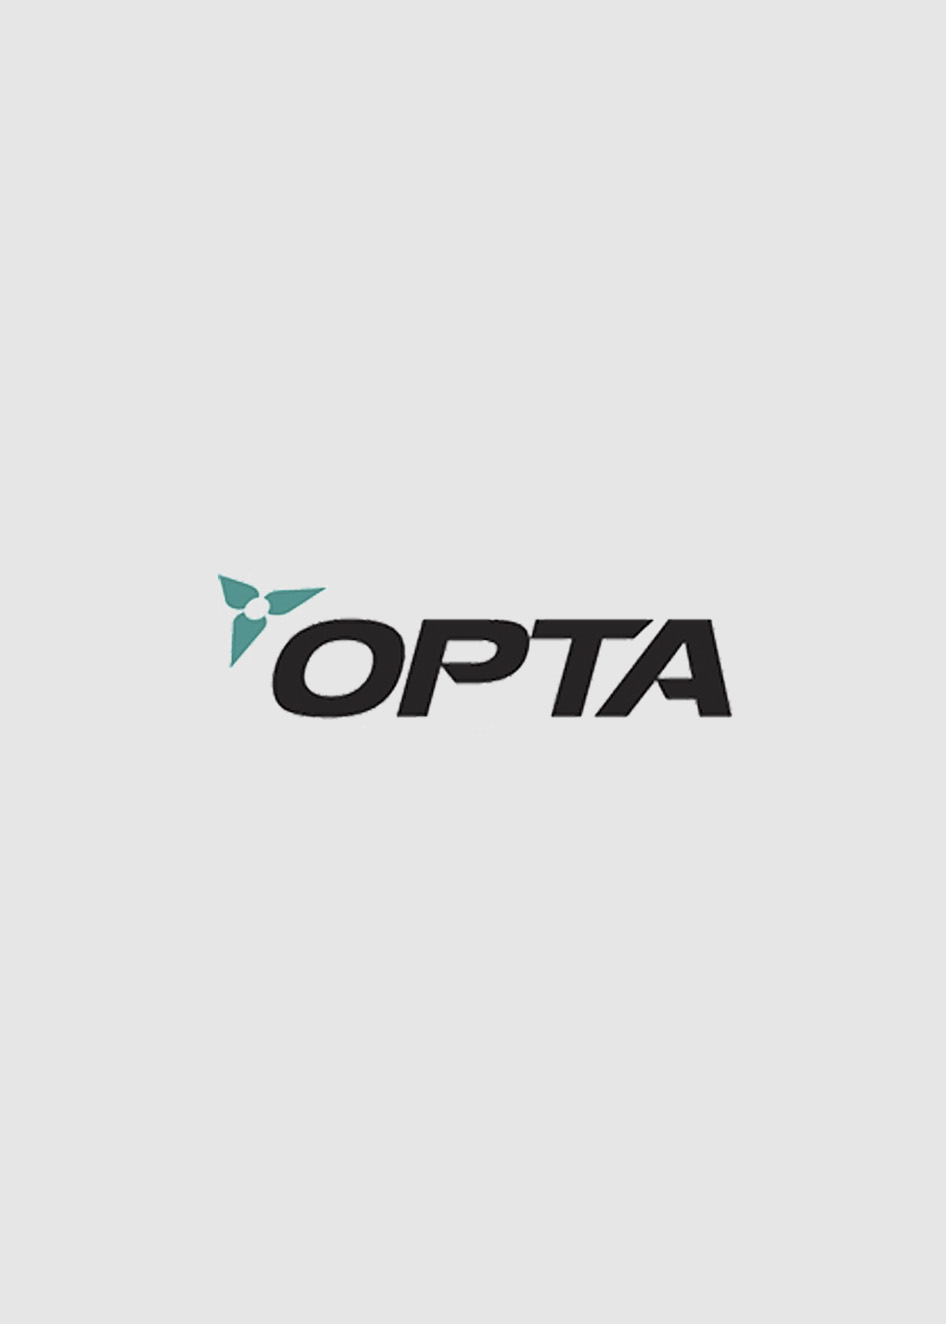 Ontario Public Transit Association